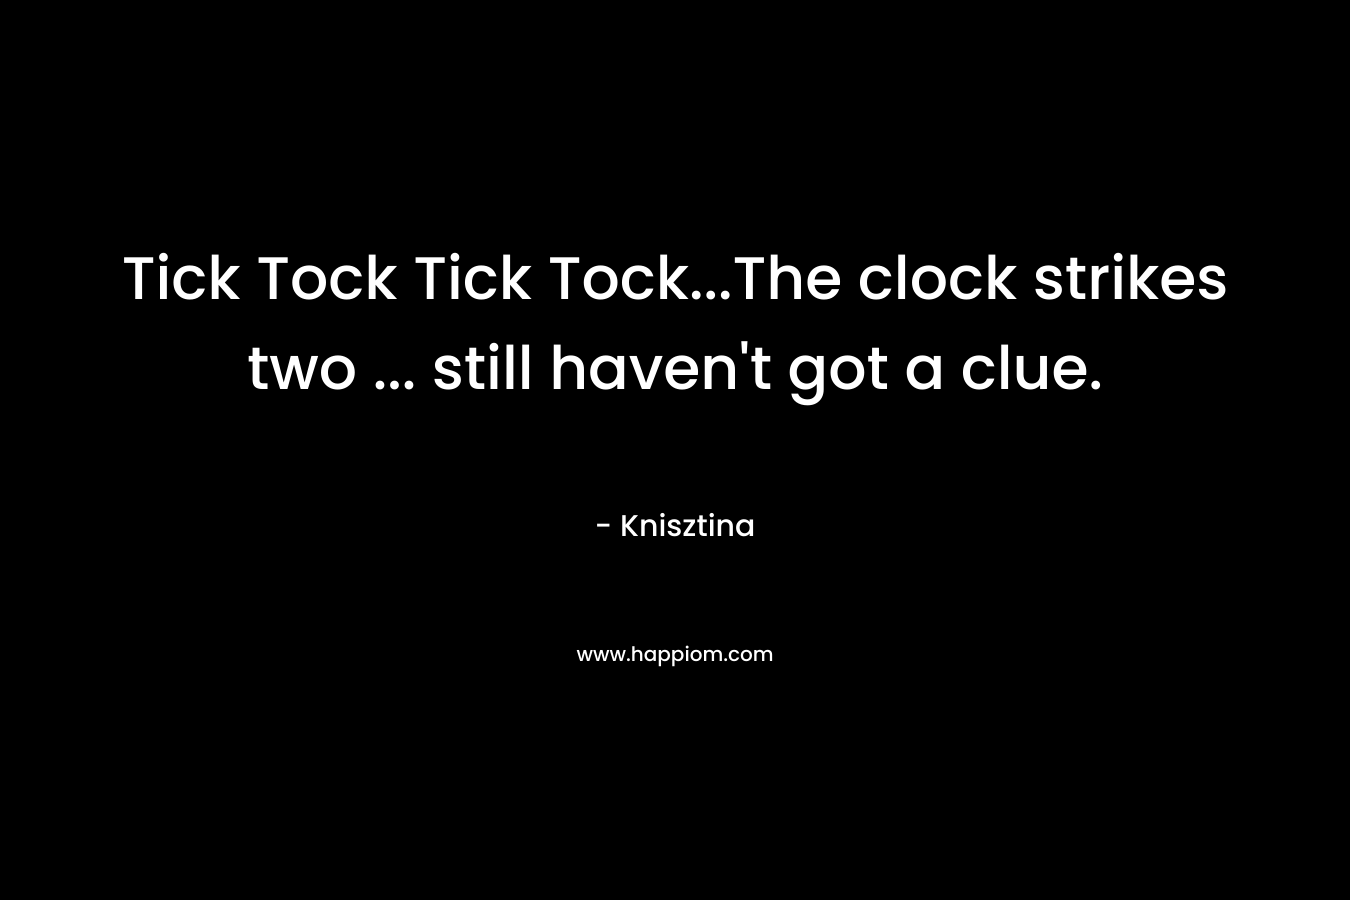 Tick Tock Tick Tock...The clock strikes two ... still haven't got a clue.